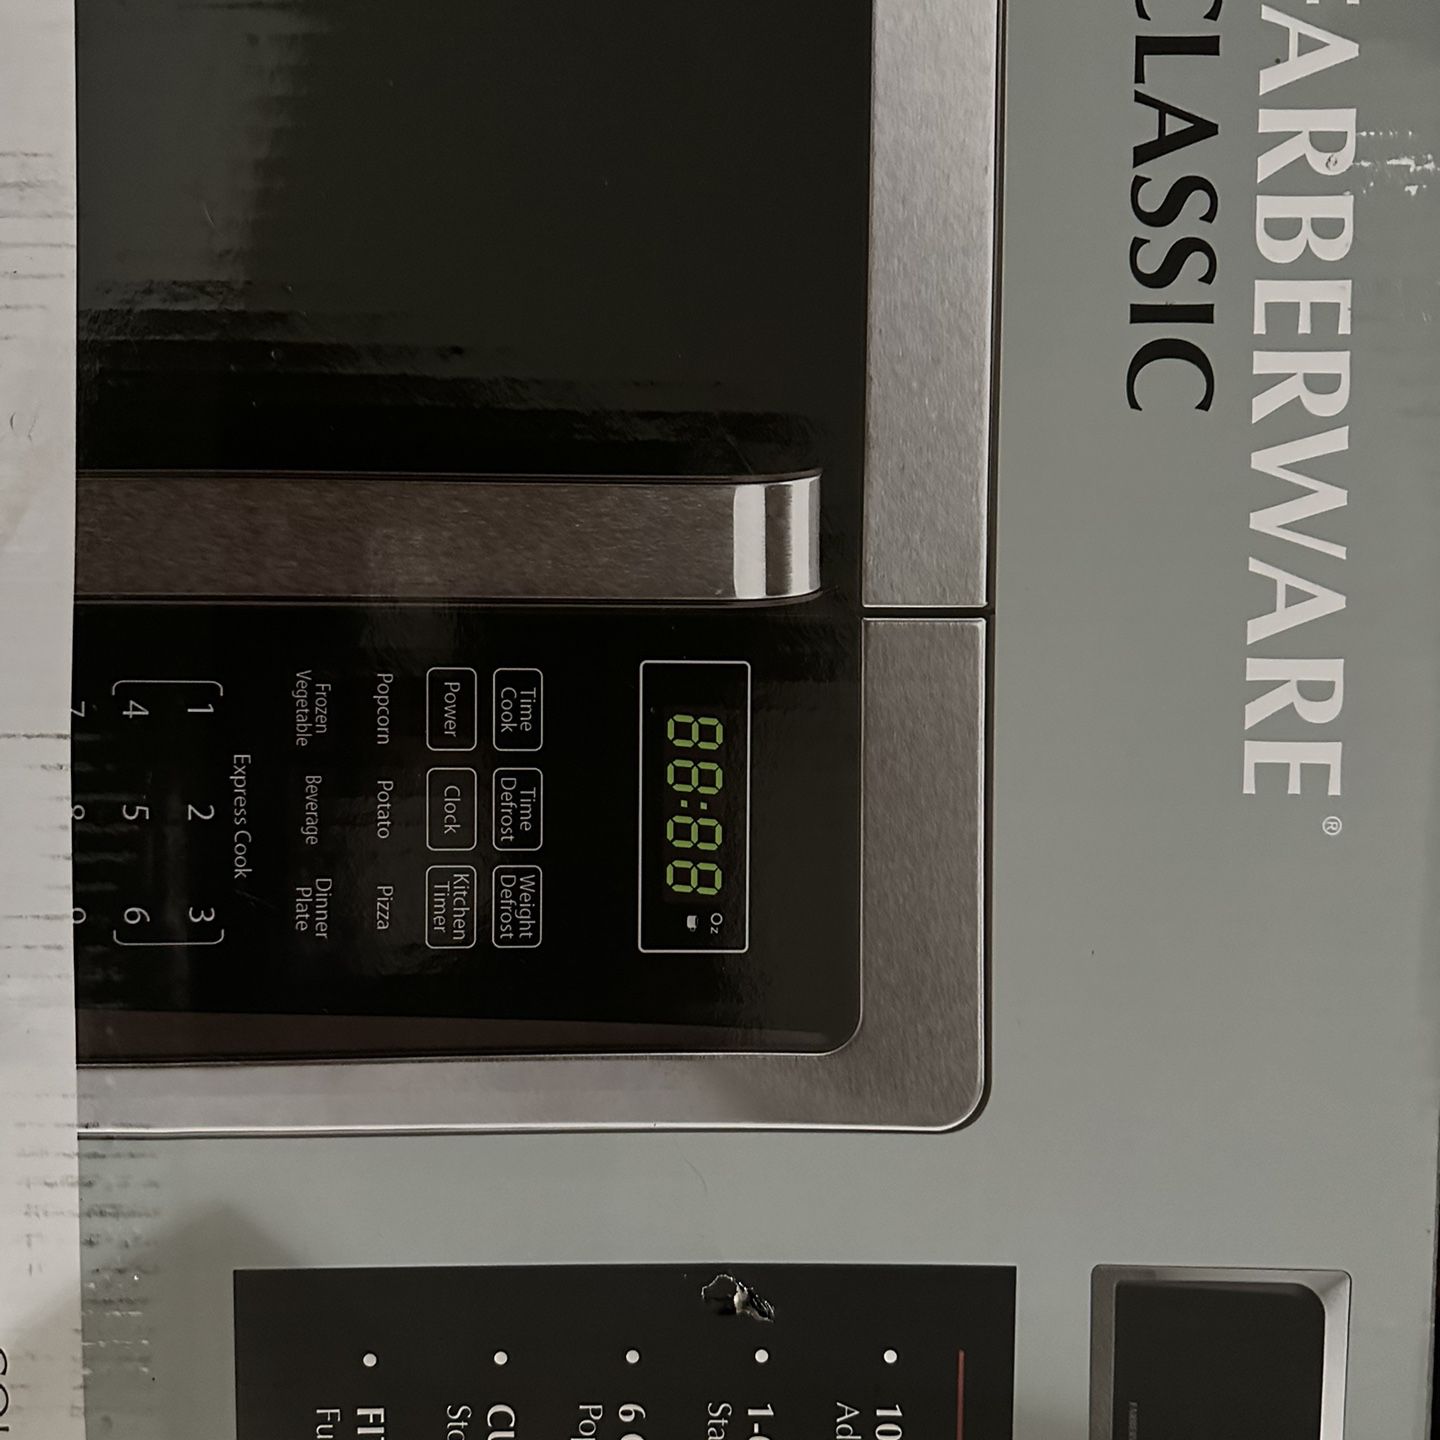 Brand New Farberwear Microwave